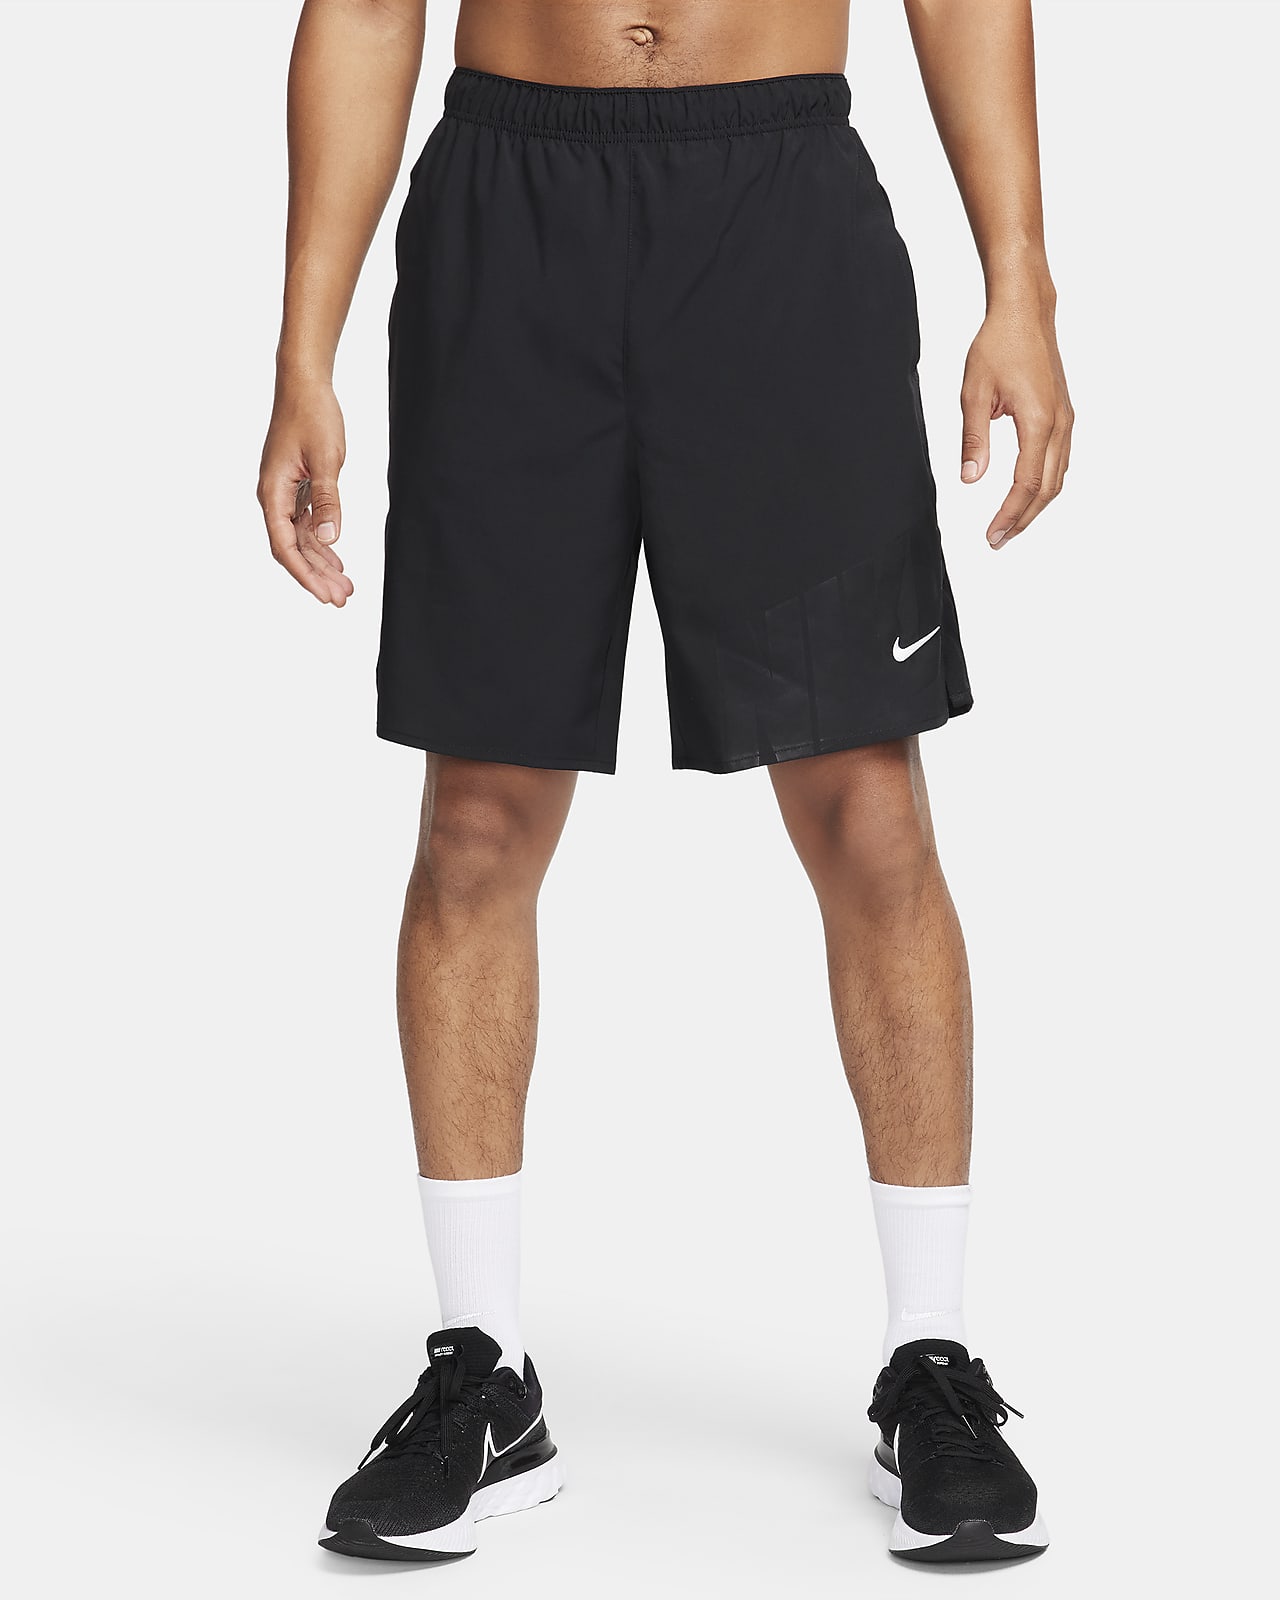 Nike Challenger Pantalons curts Dri-FIT sense folre de 23 cm de running - Home